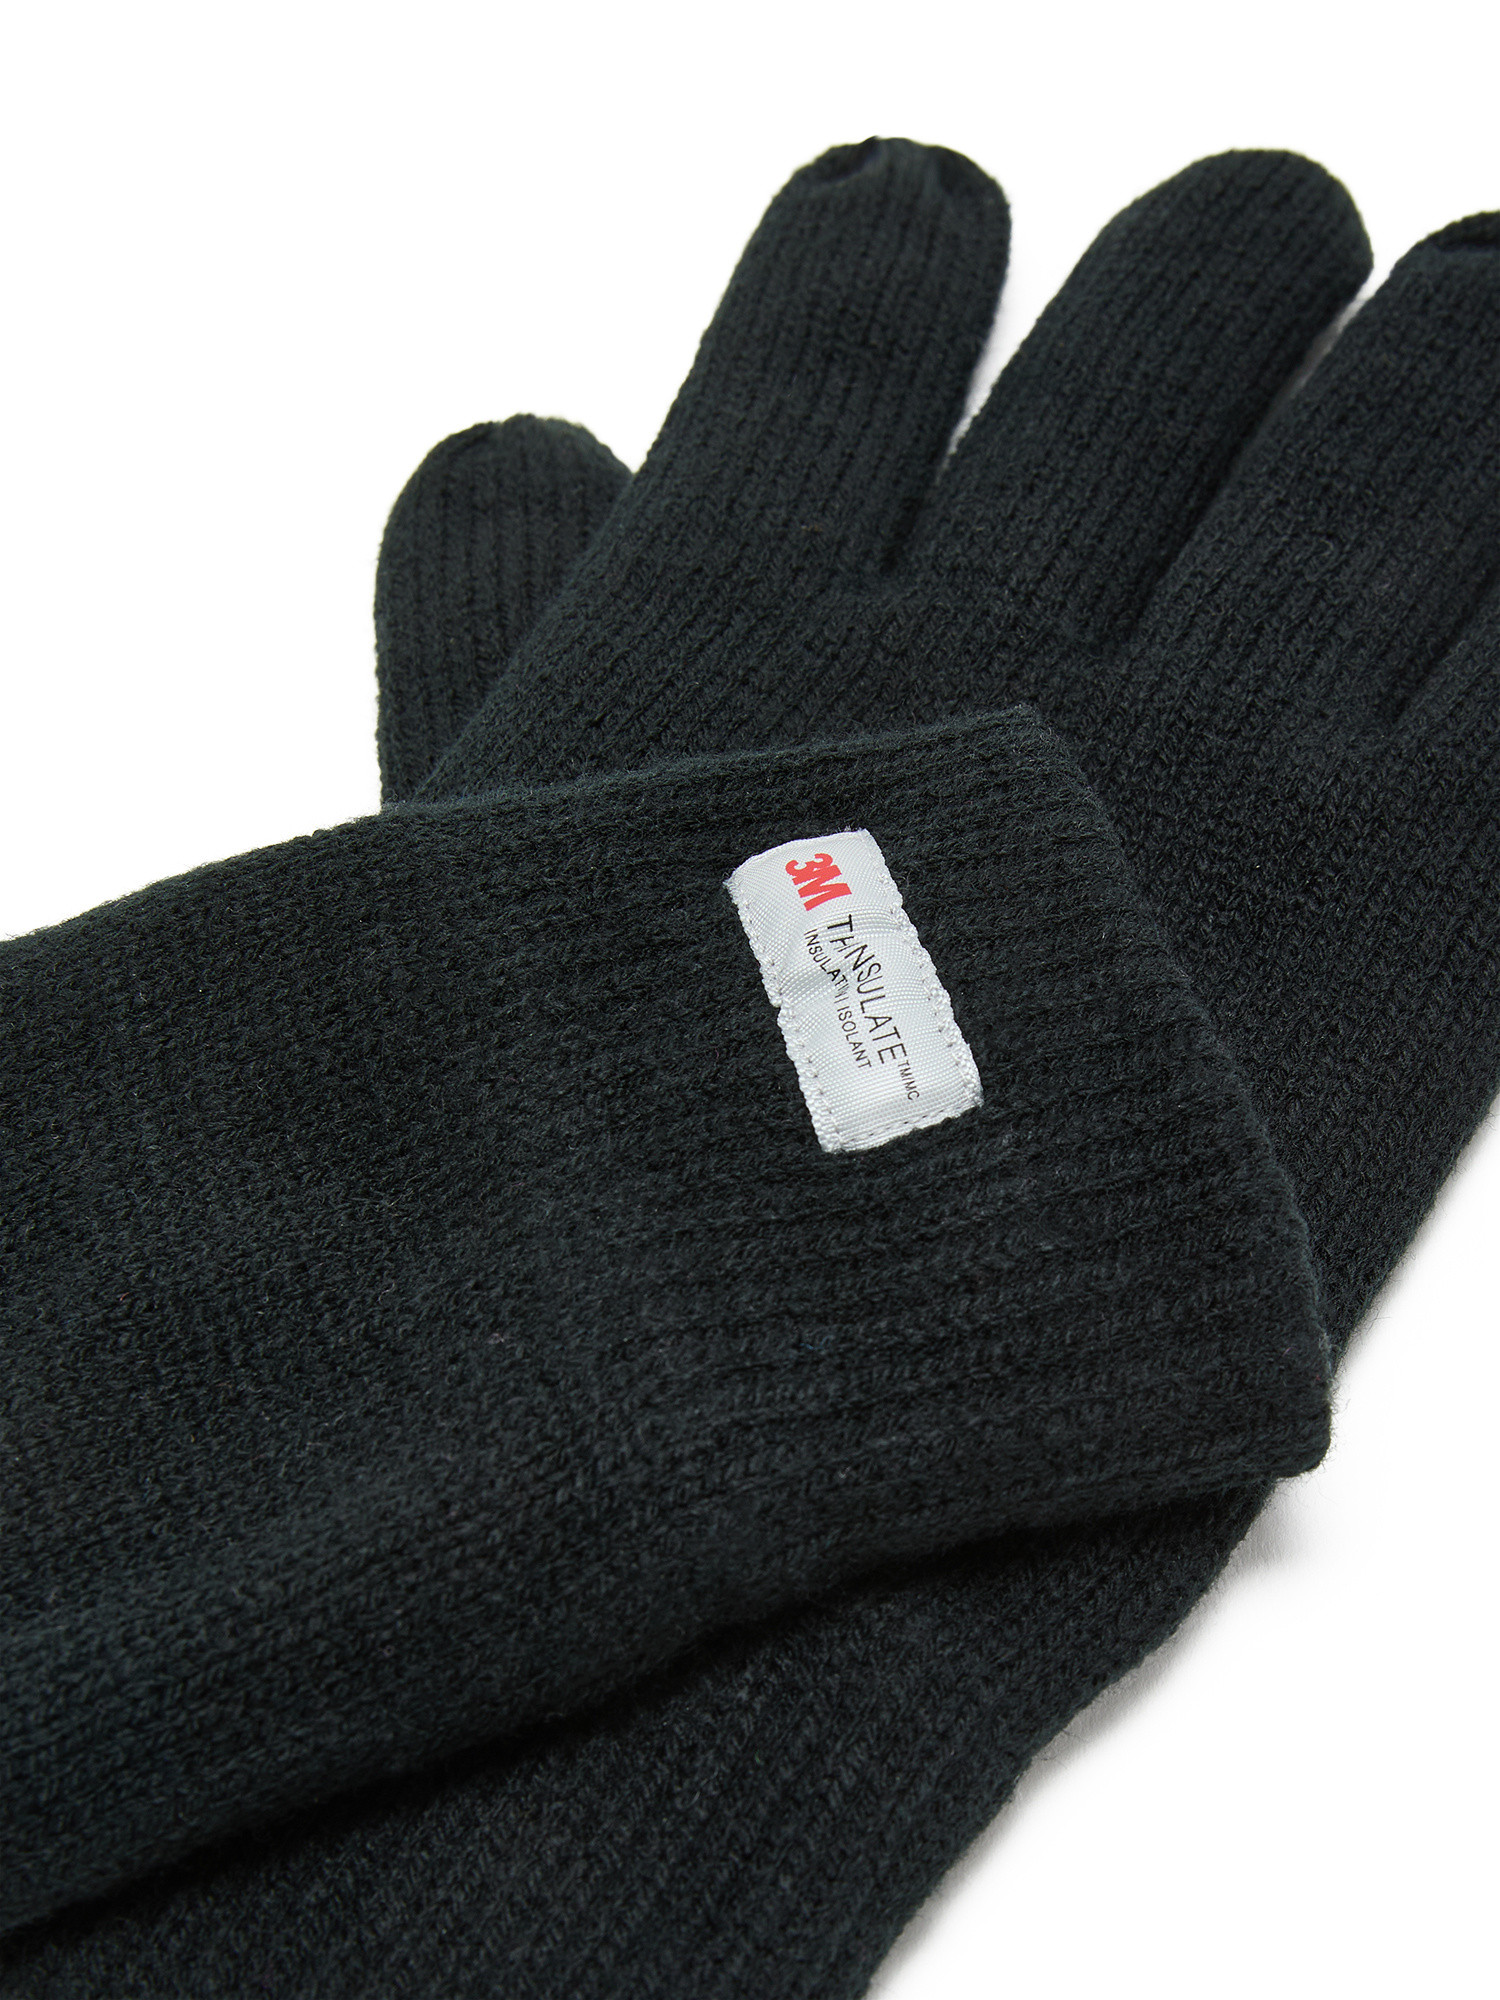 Luca D'Altieri - Knitted gloves, Black, large image number 1